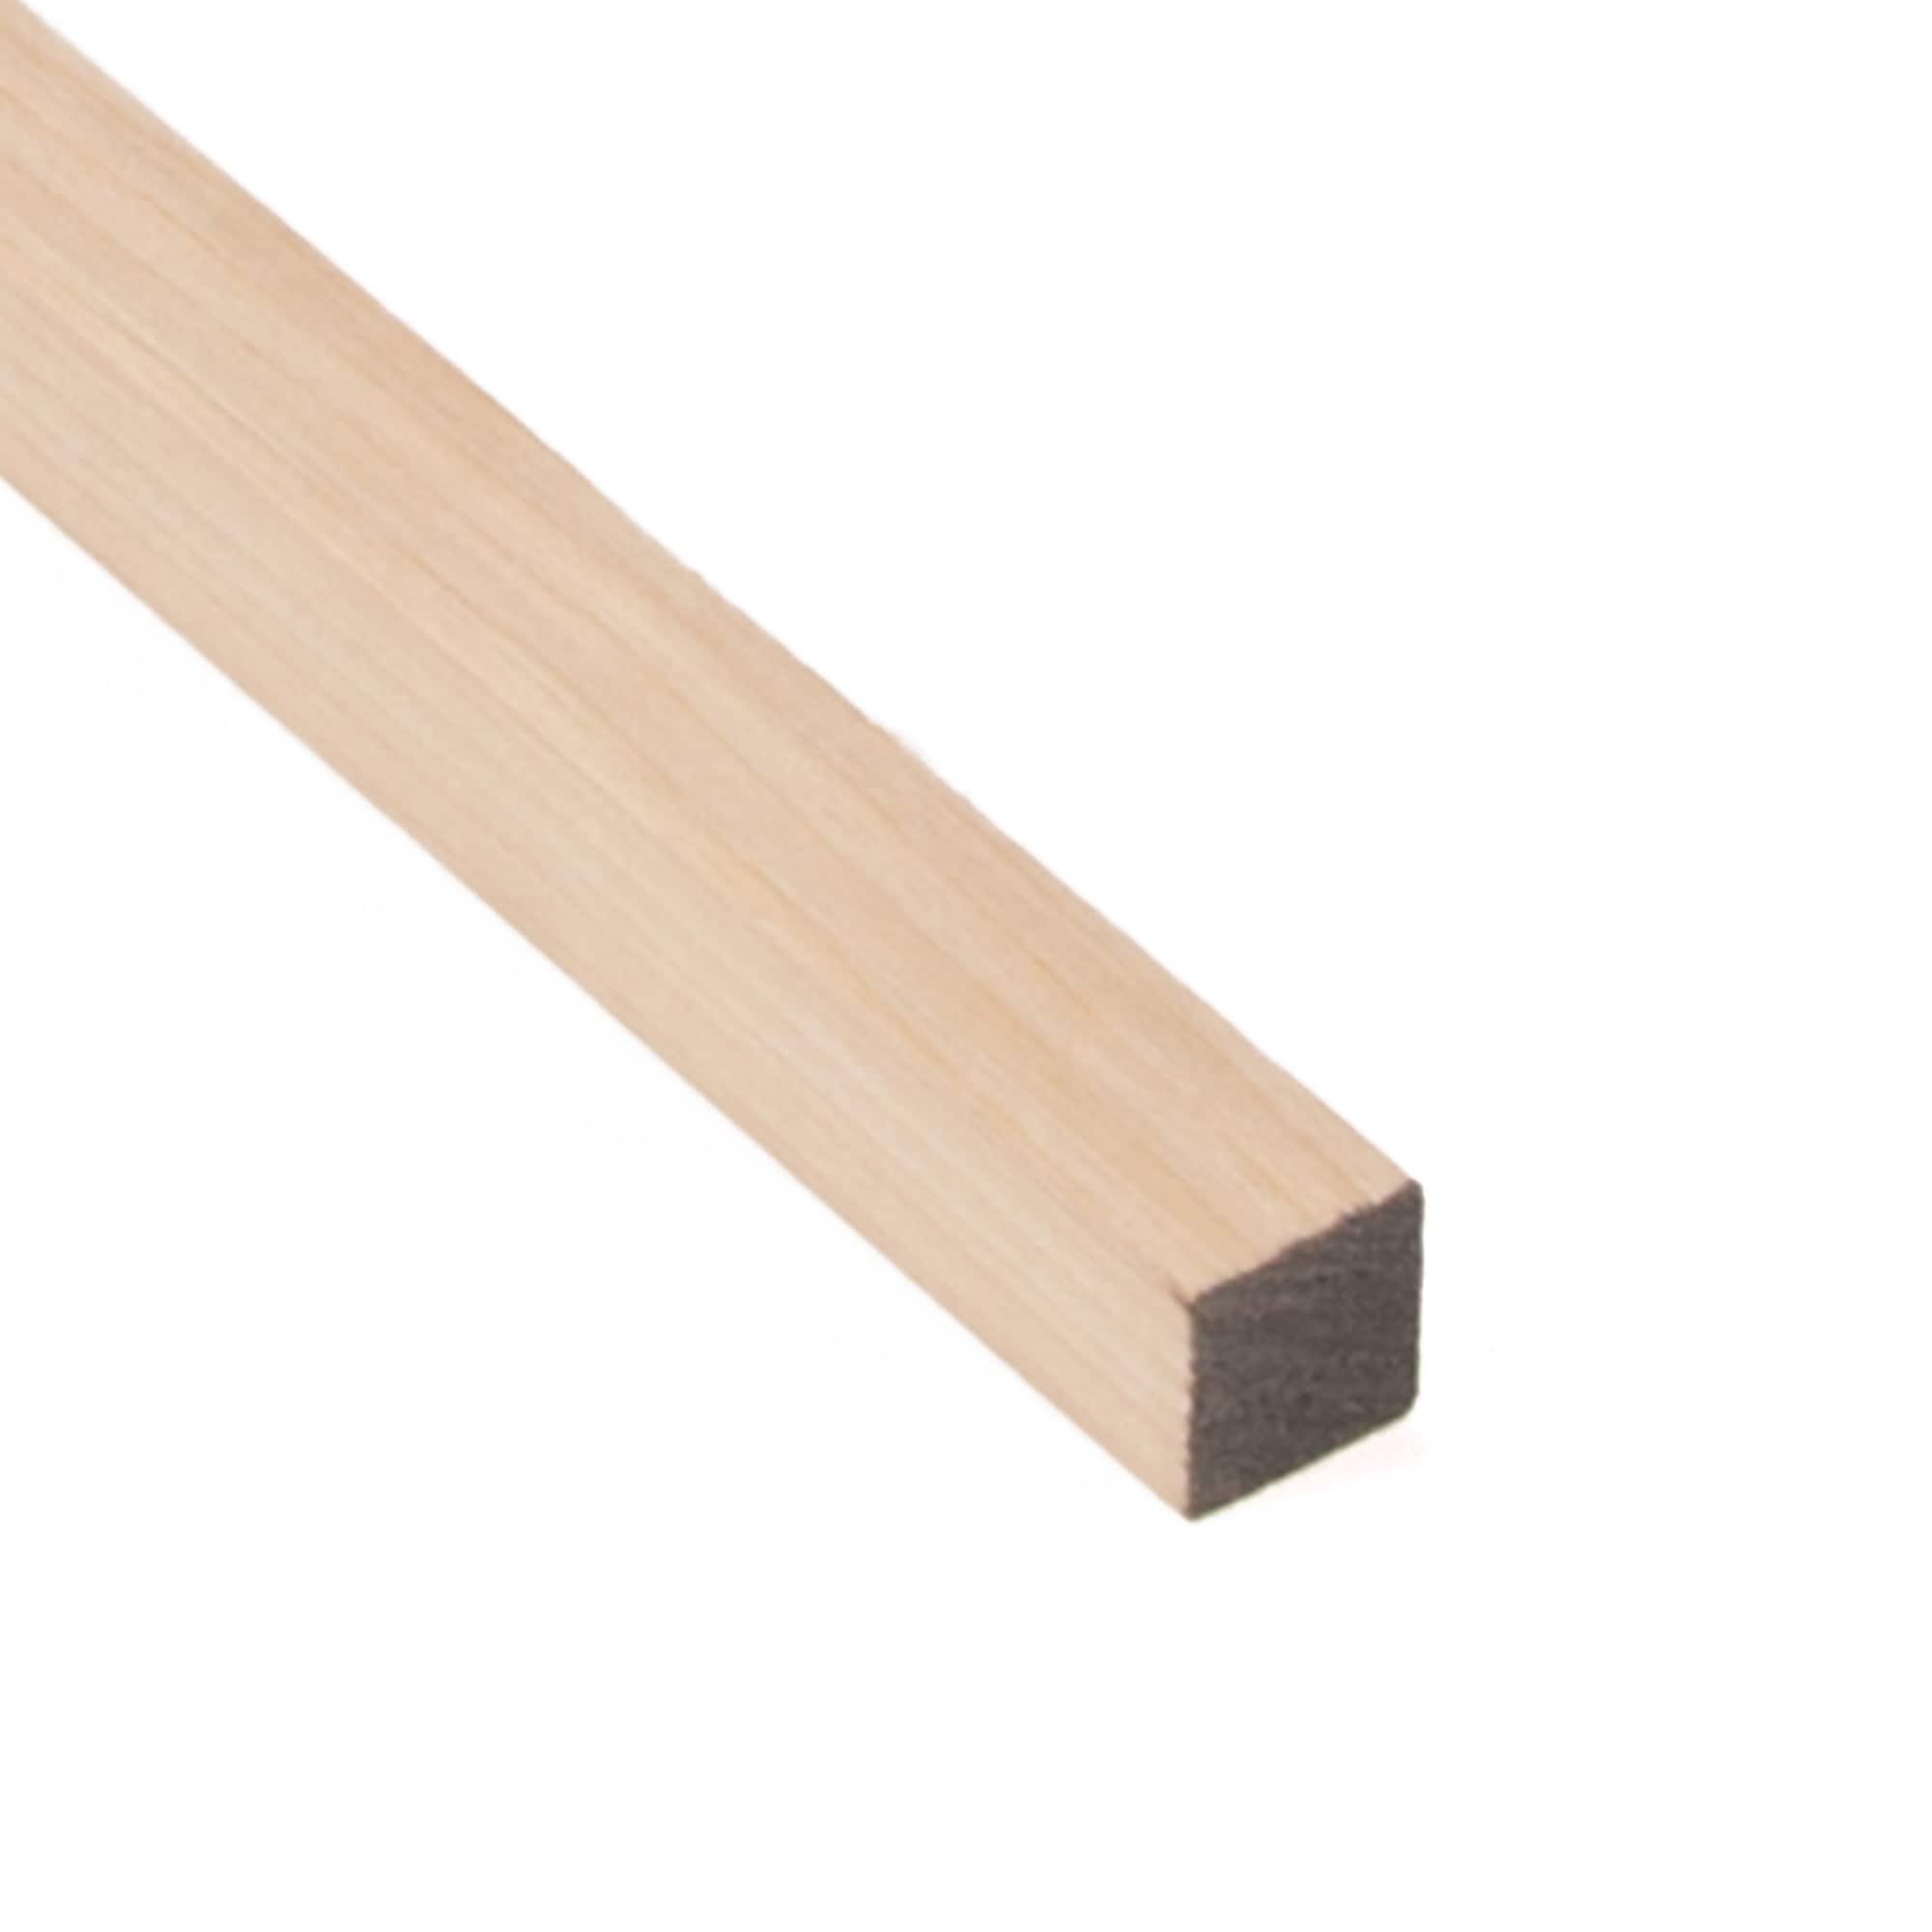 Wood Square Dowel Rods 1/4 inch Diameter, Multiple Lengths